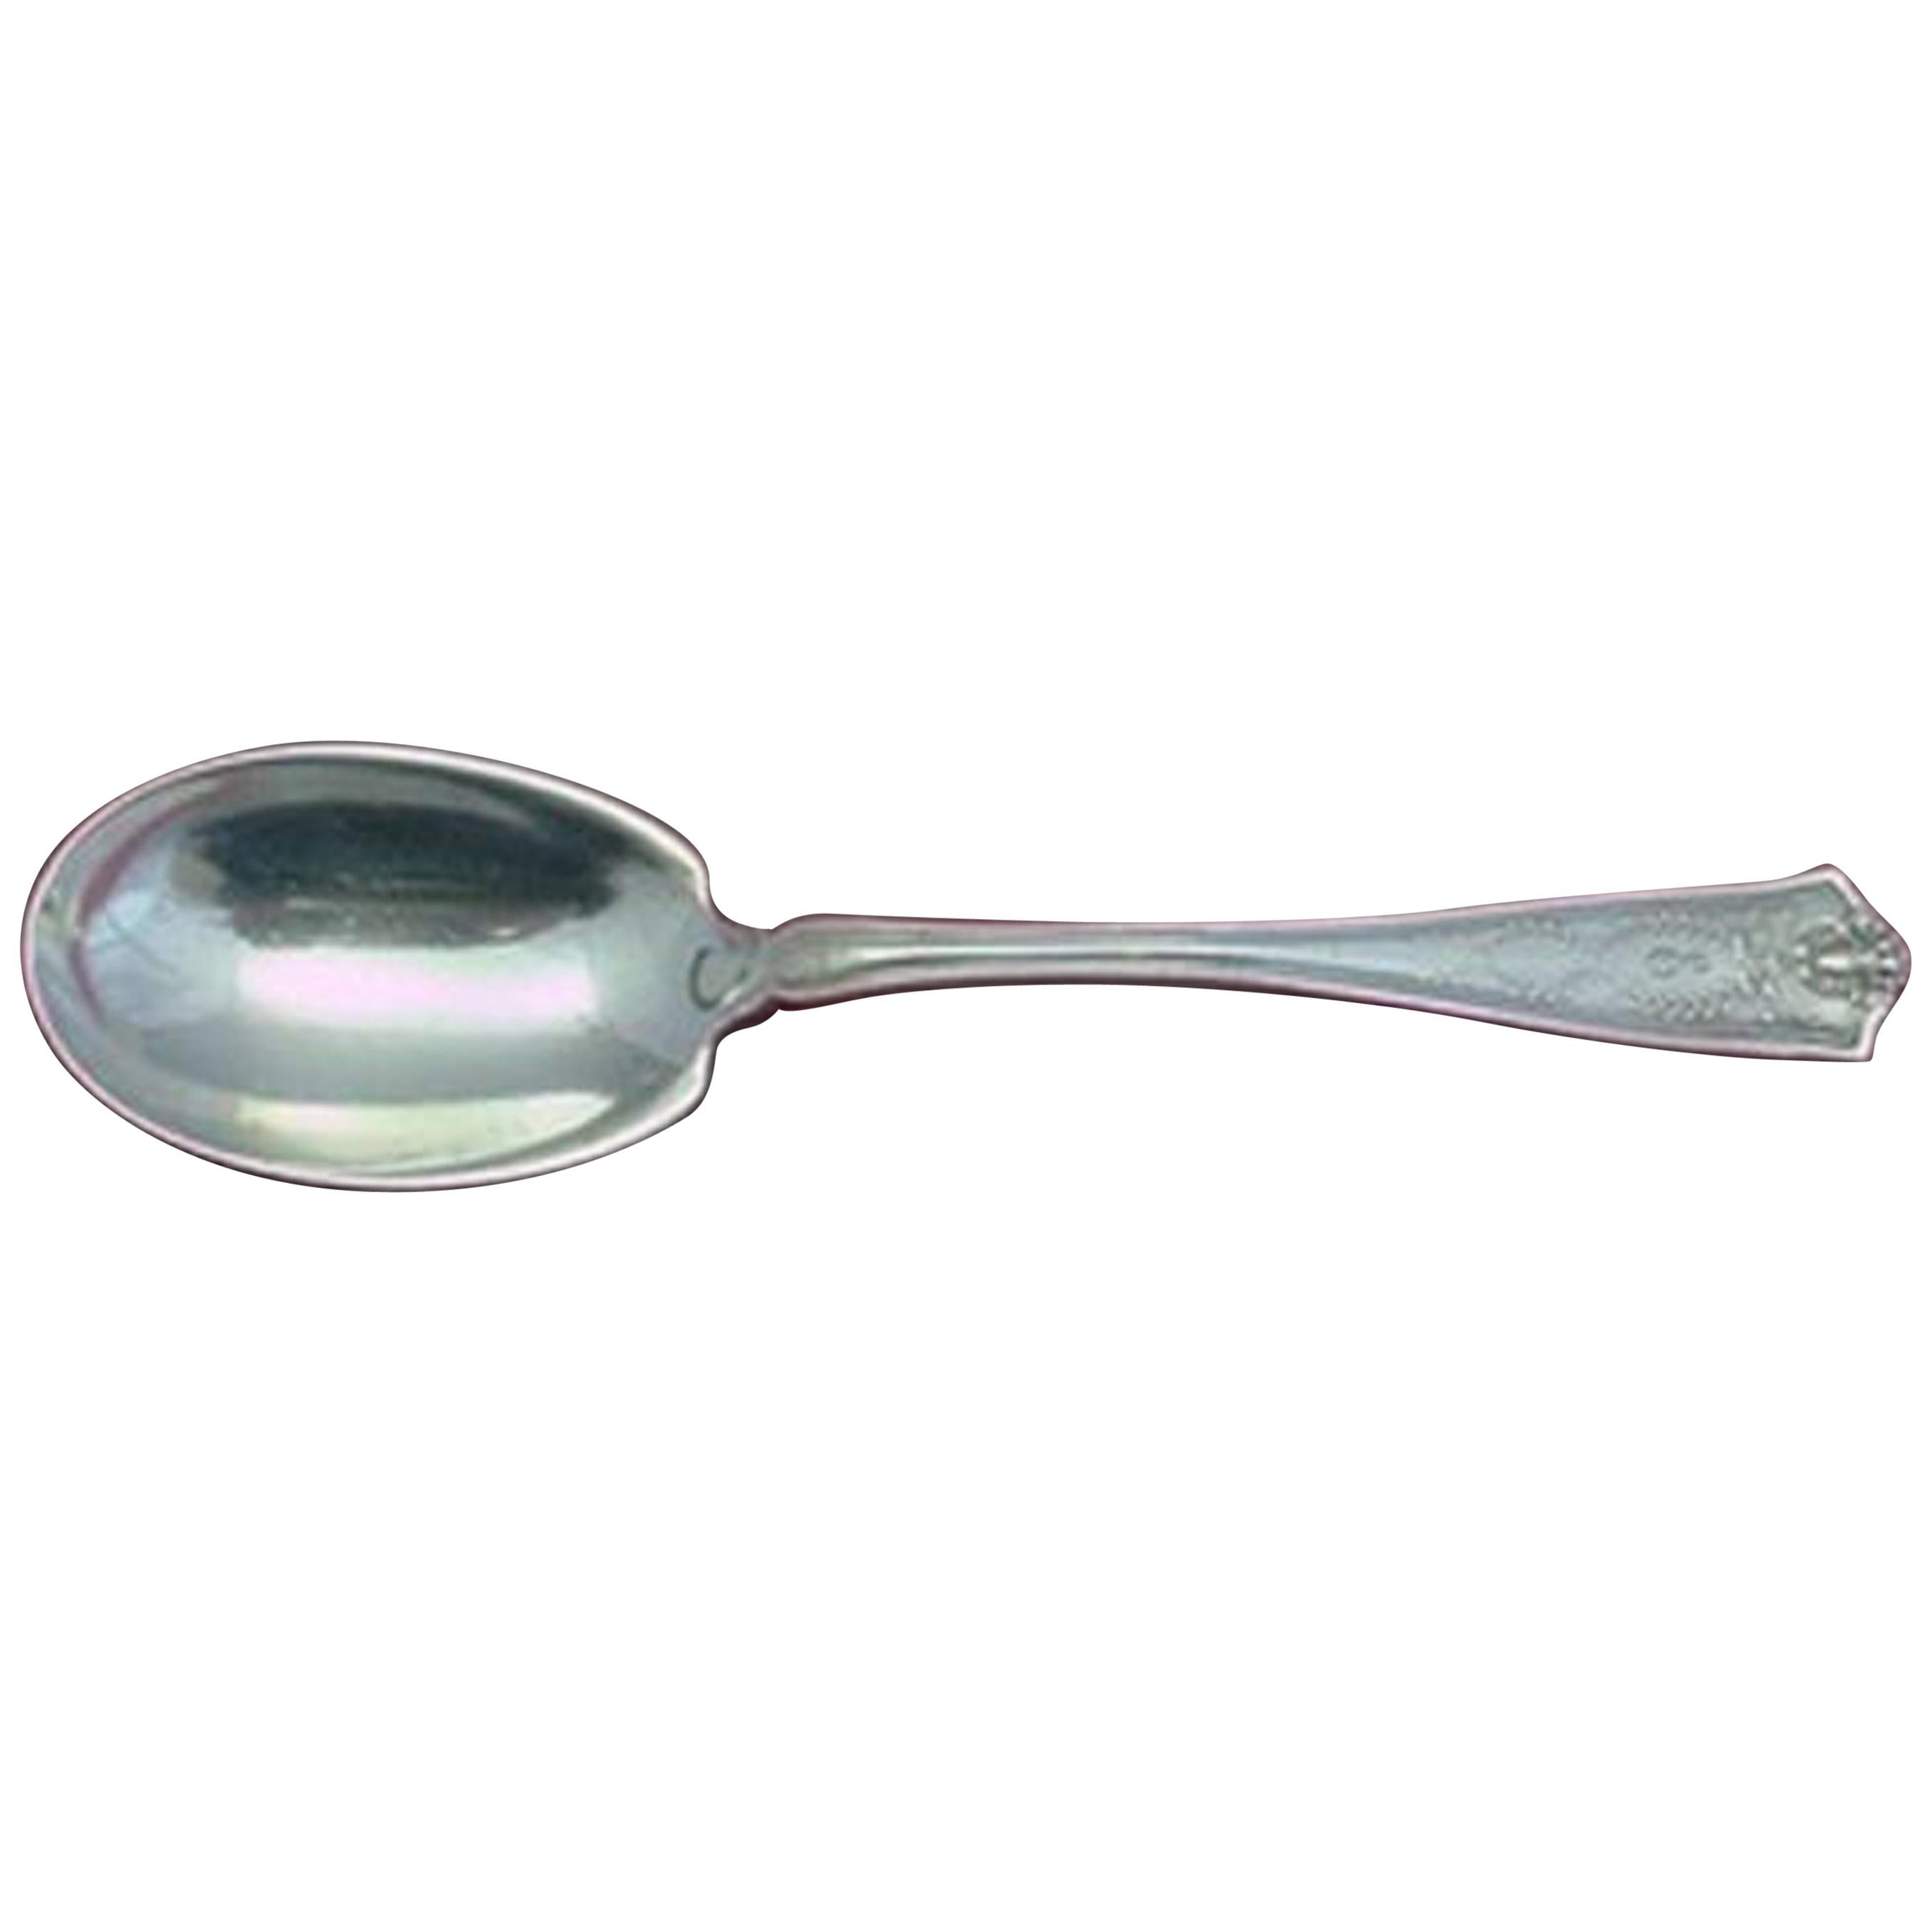 Winthrop by Tiffany & Co. Sterling Silver Preserve Spoon